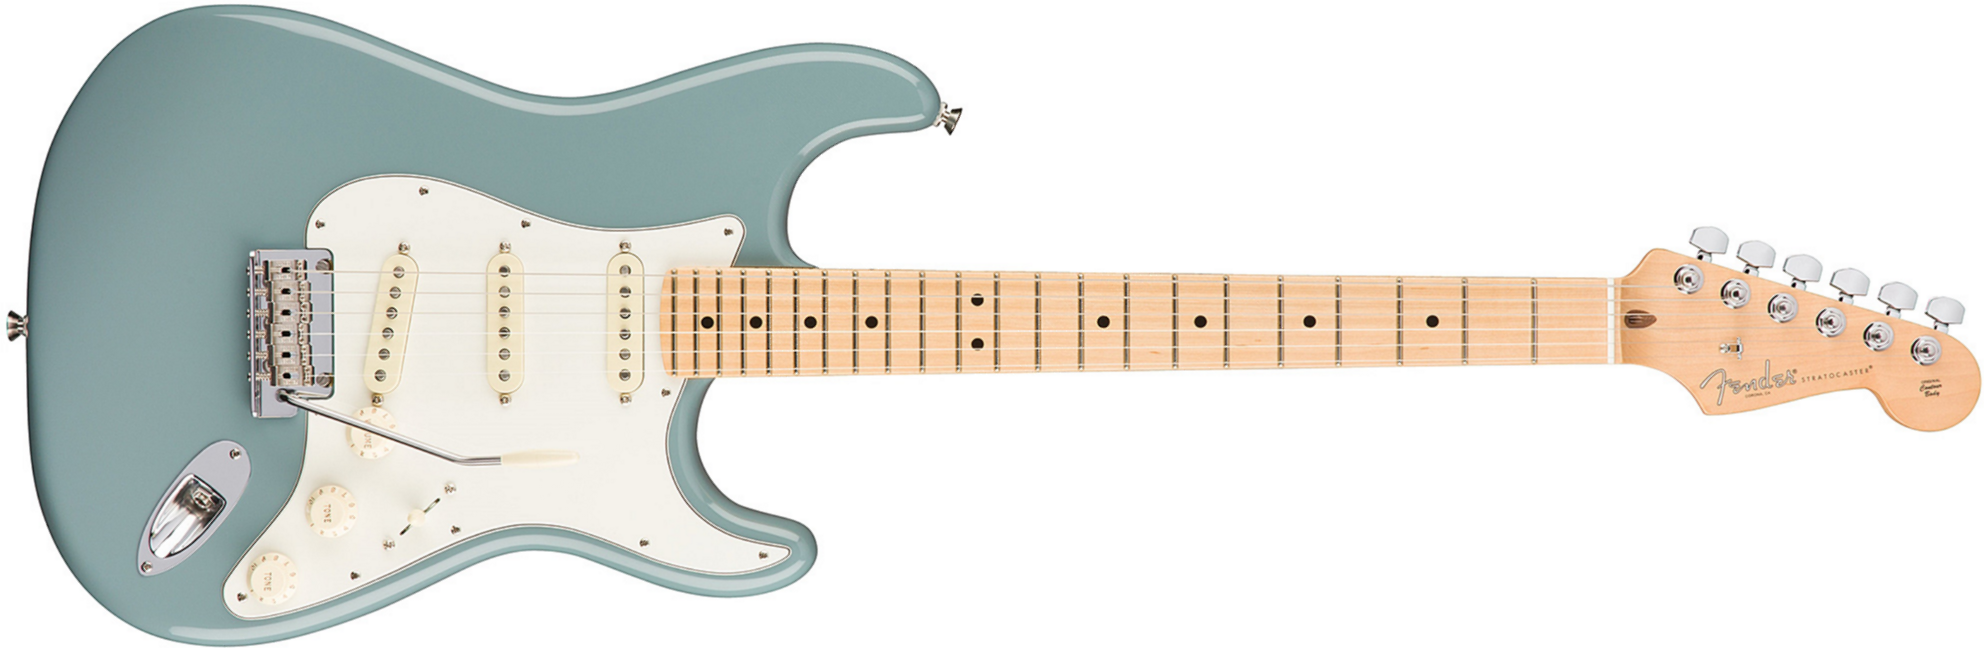 Fender Strat American Professional 2017 3s Usa Mn - Sonic Grey - Guitare Électrique Forme Str - Main picture